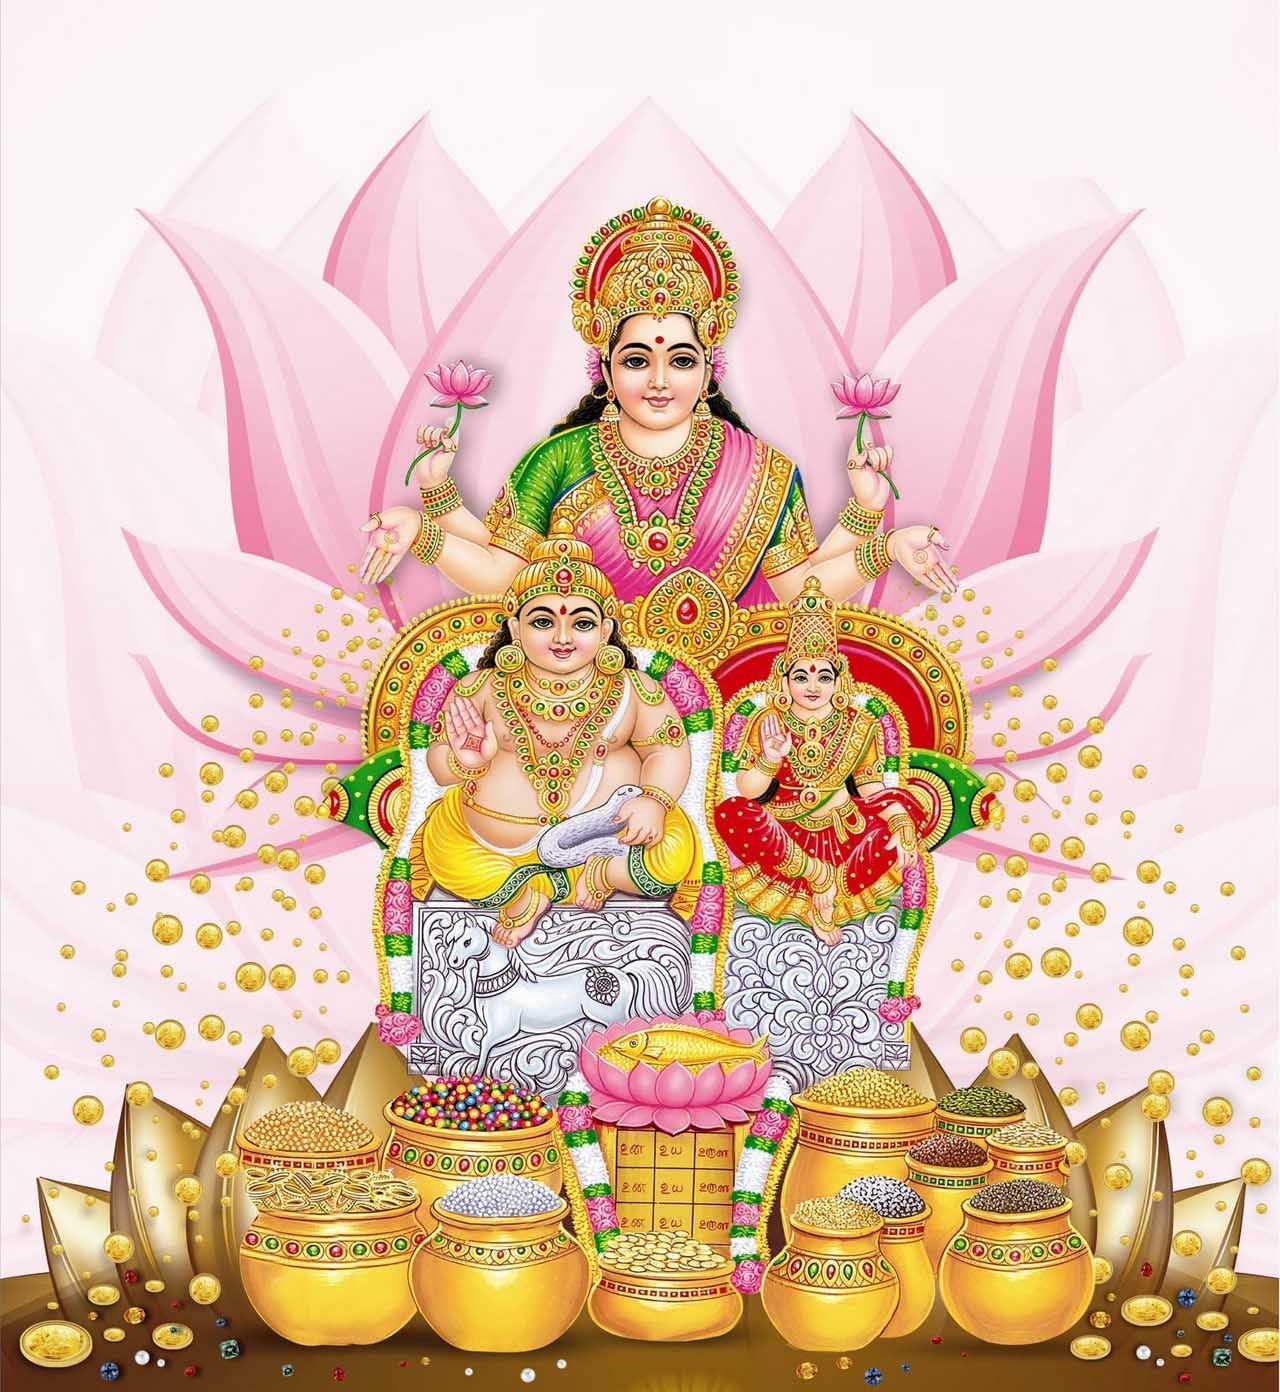 Kuber Yantra Wallpaper HD Free Download. Lakshmi image, Hindu gods, Hindu symbols